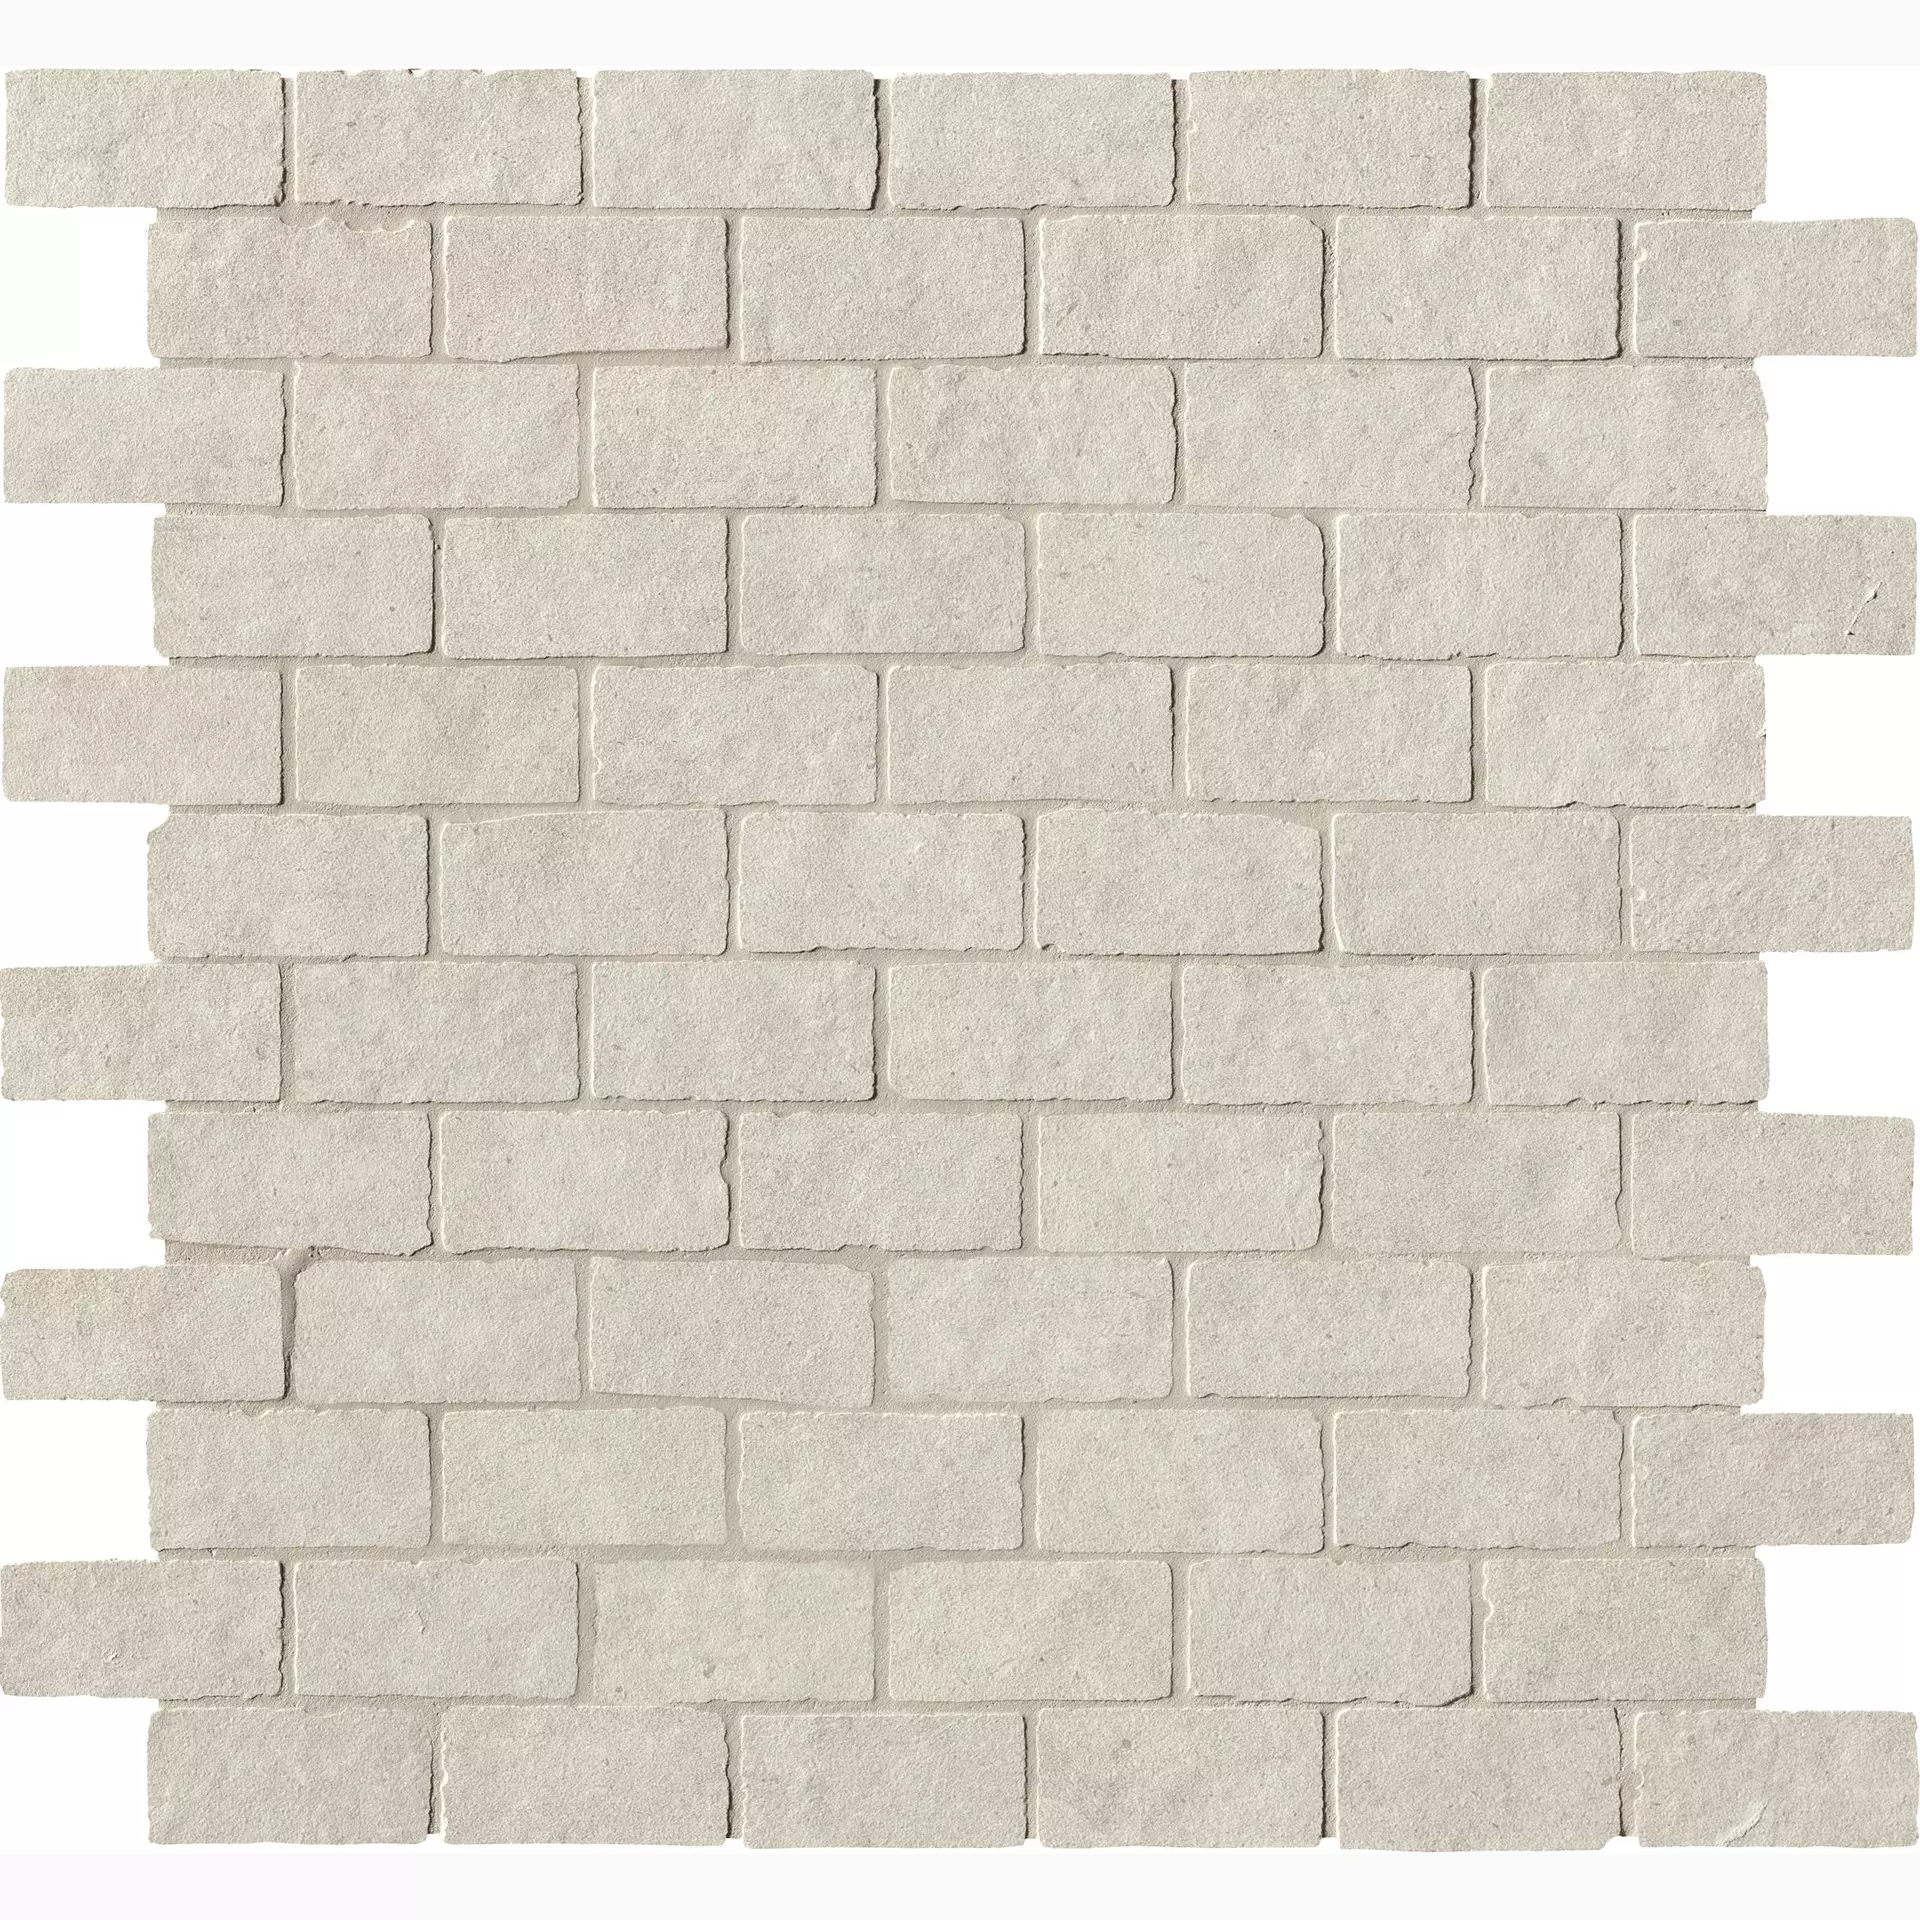 FAP Lumina Stone Grey Anticato Macromosaico Brick fOMK 30,5x30,5cm